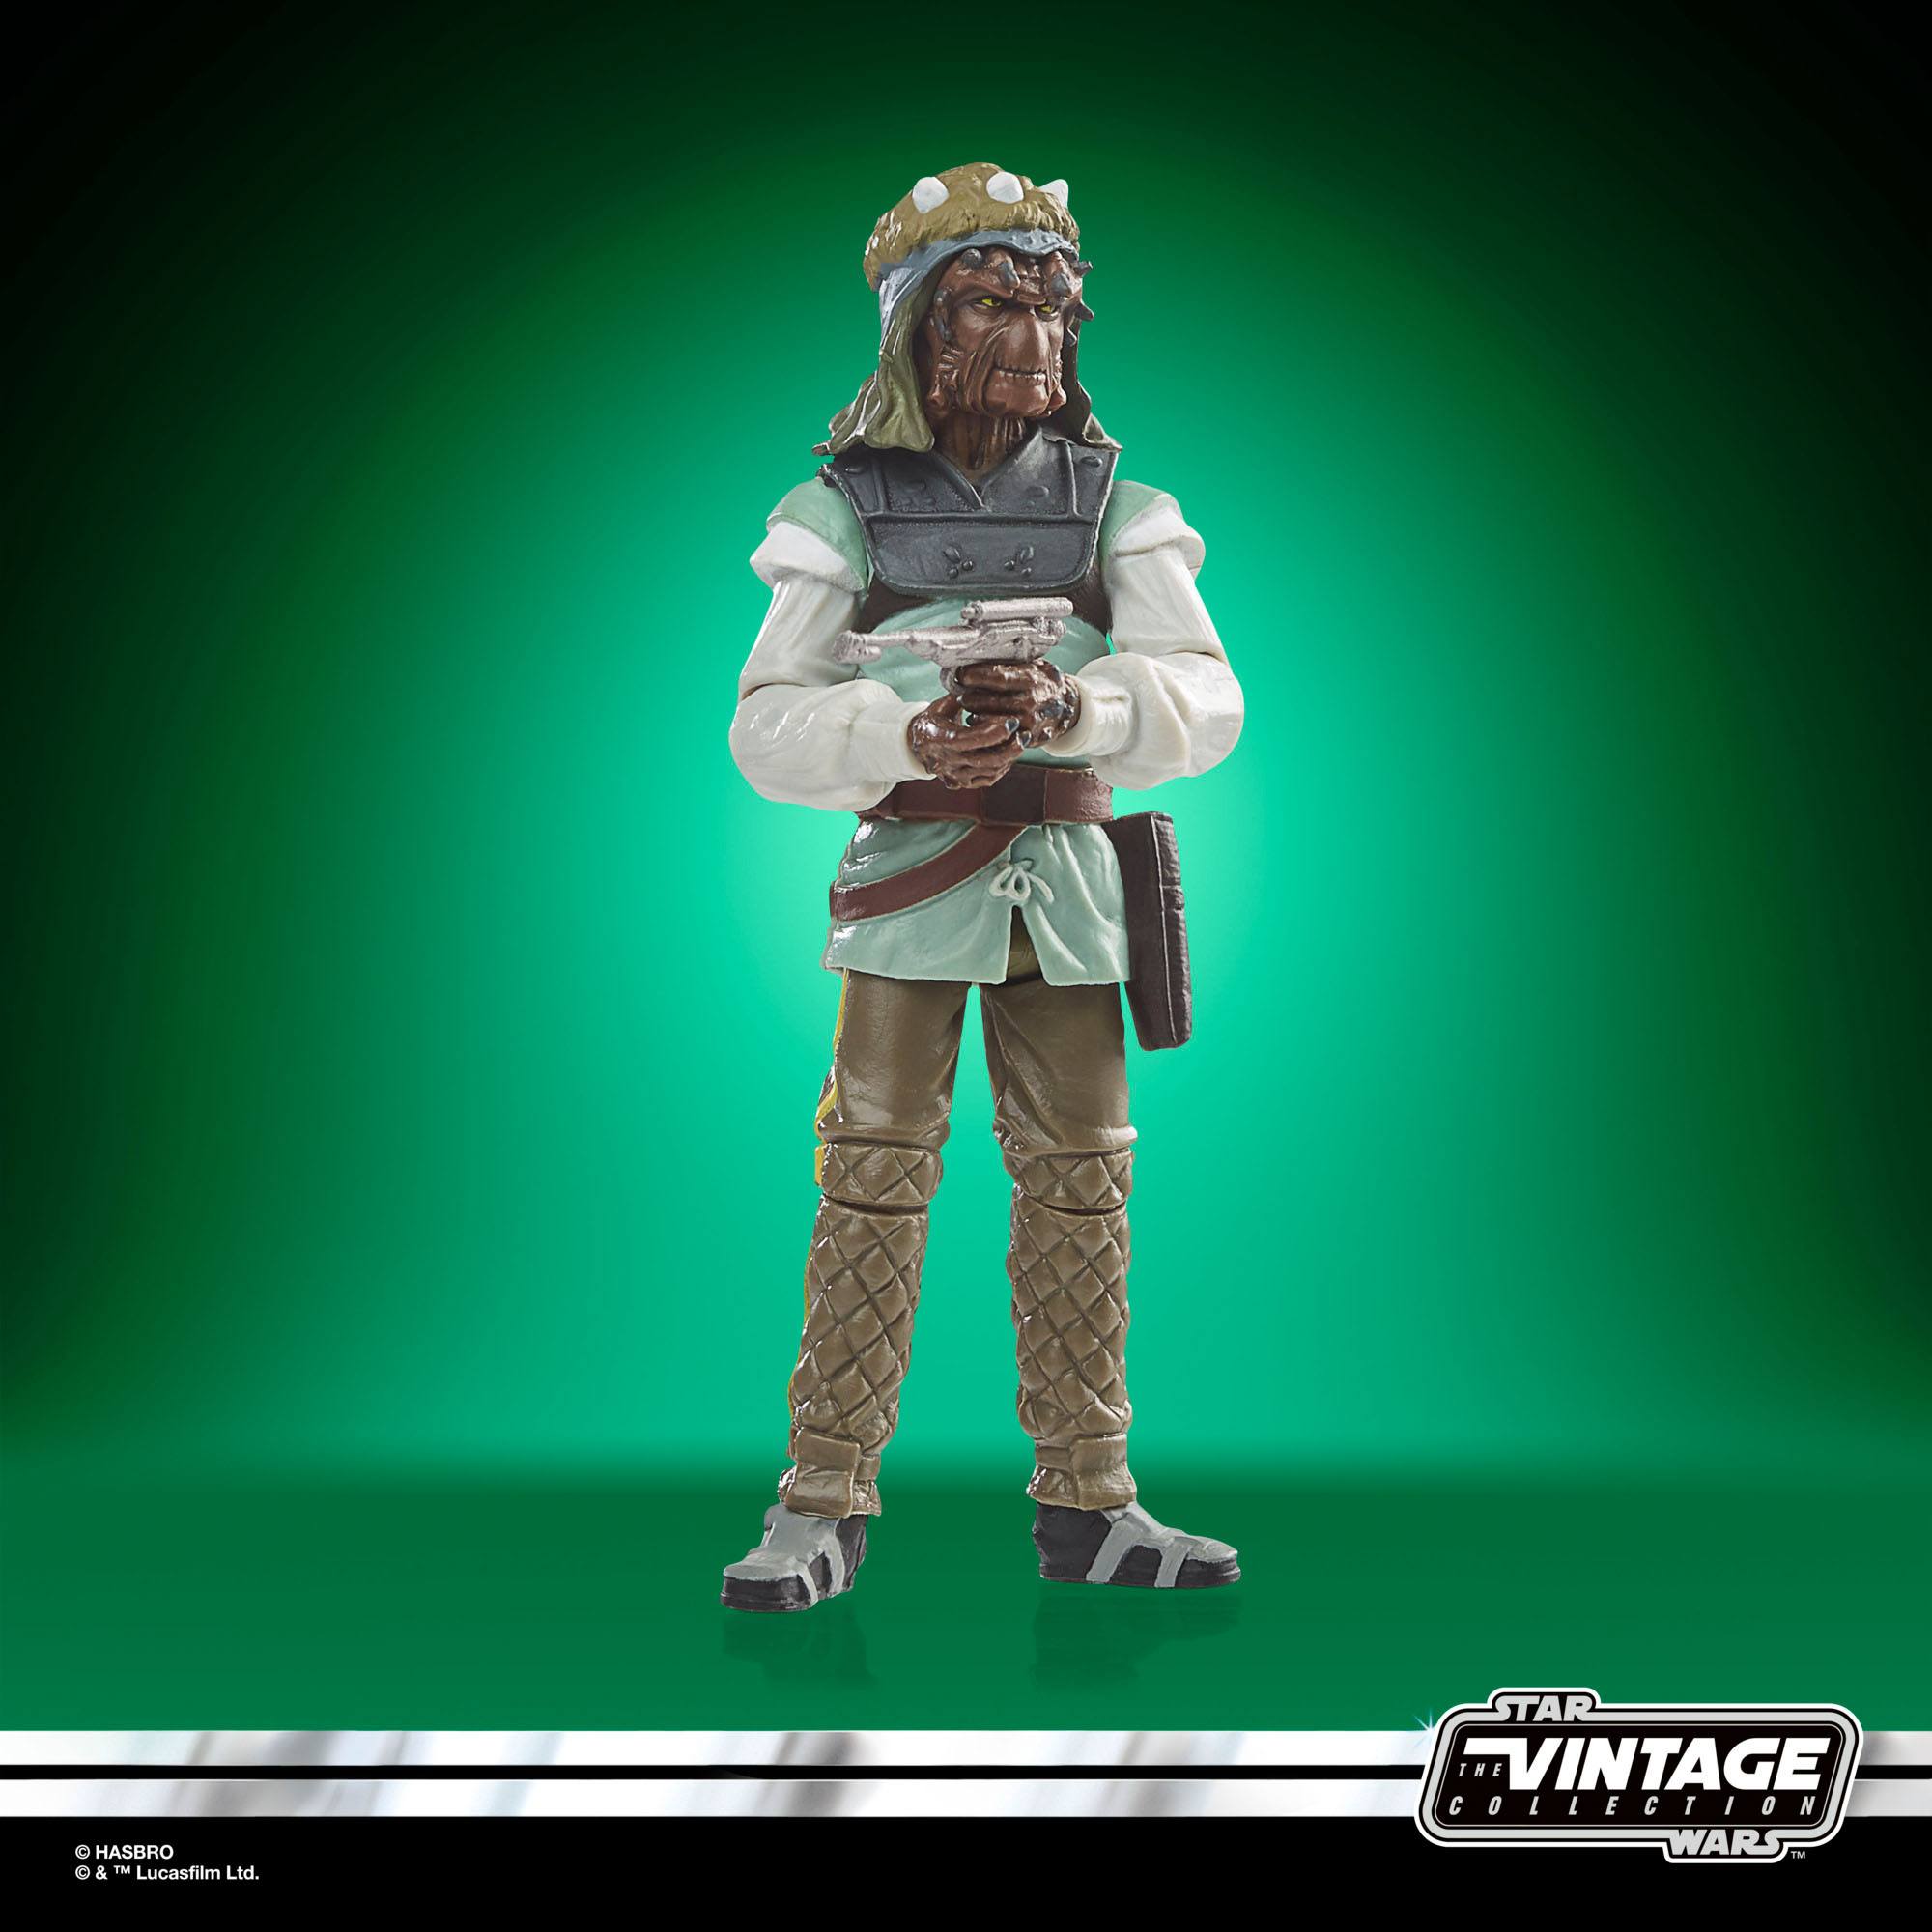 Star Wars Episode VI Vintage Collection Actionfigur Nikto (Skiff Guard) 10 cm F73375L00 5010996124760